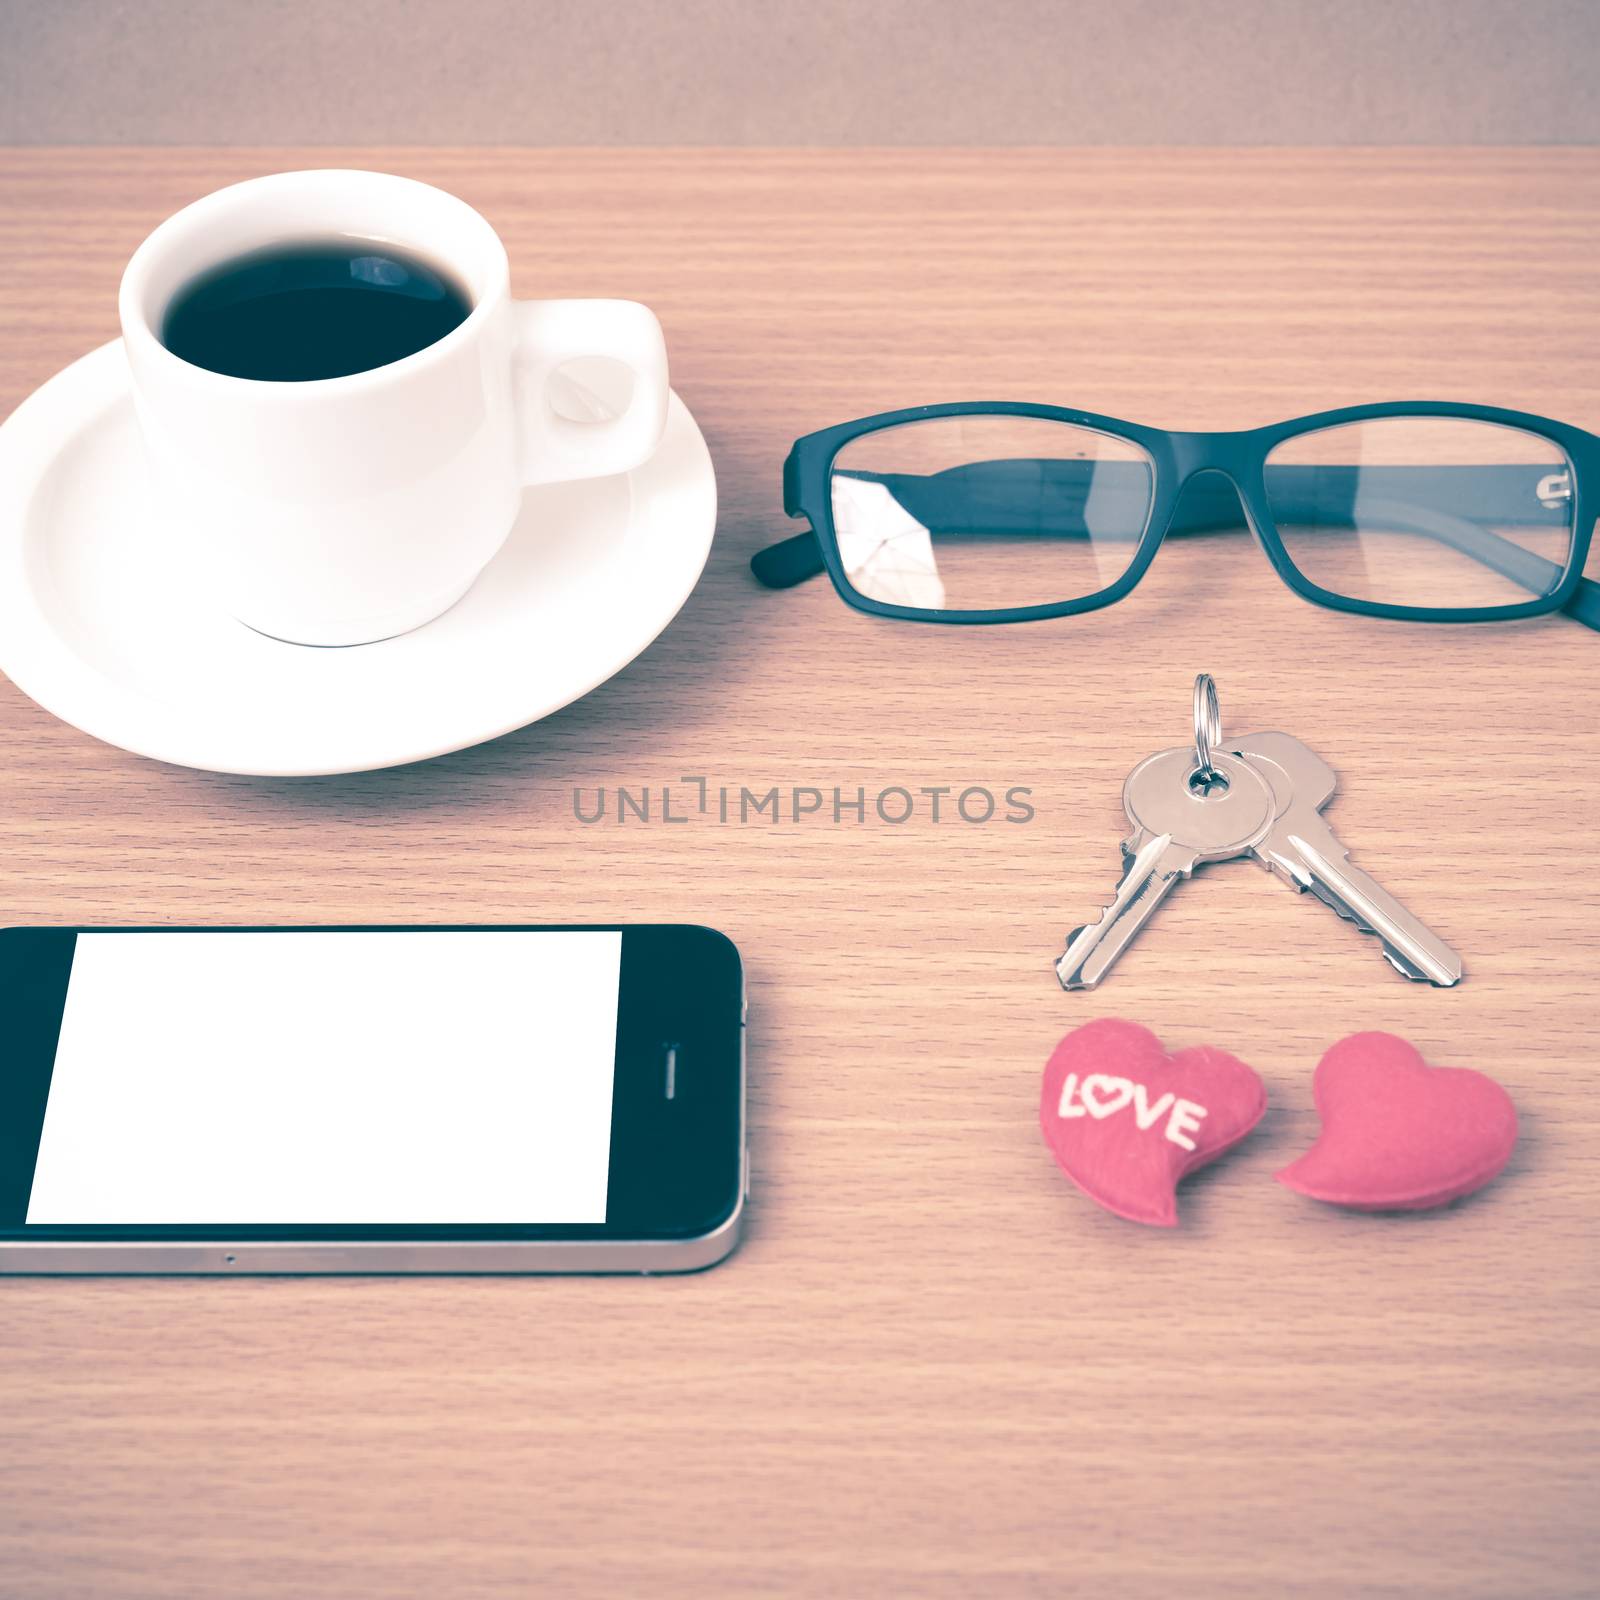 coffee,phone,eyeglasses and key by ammza12